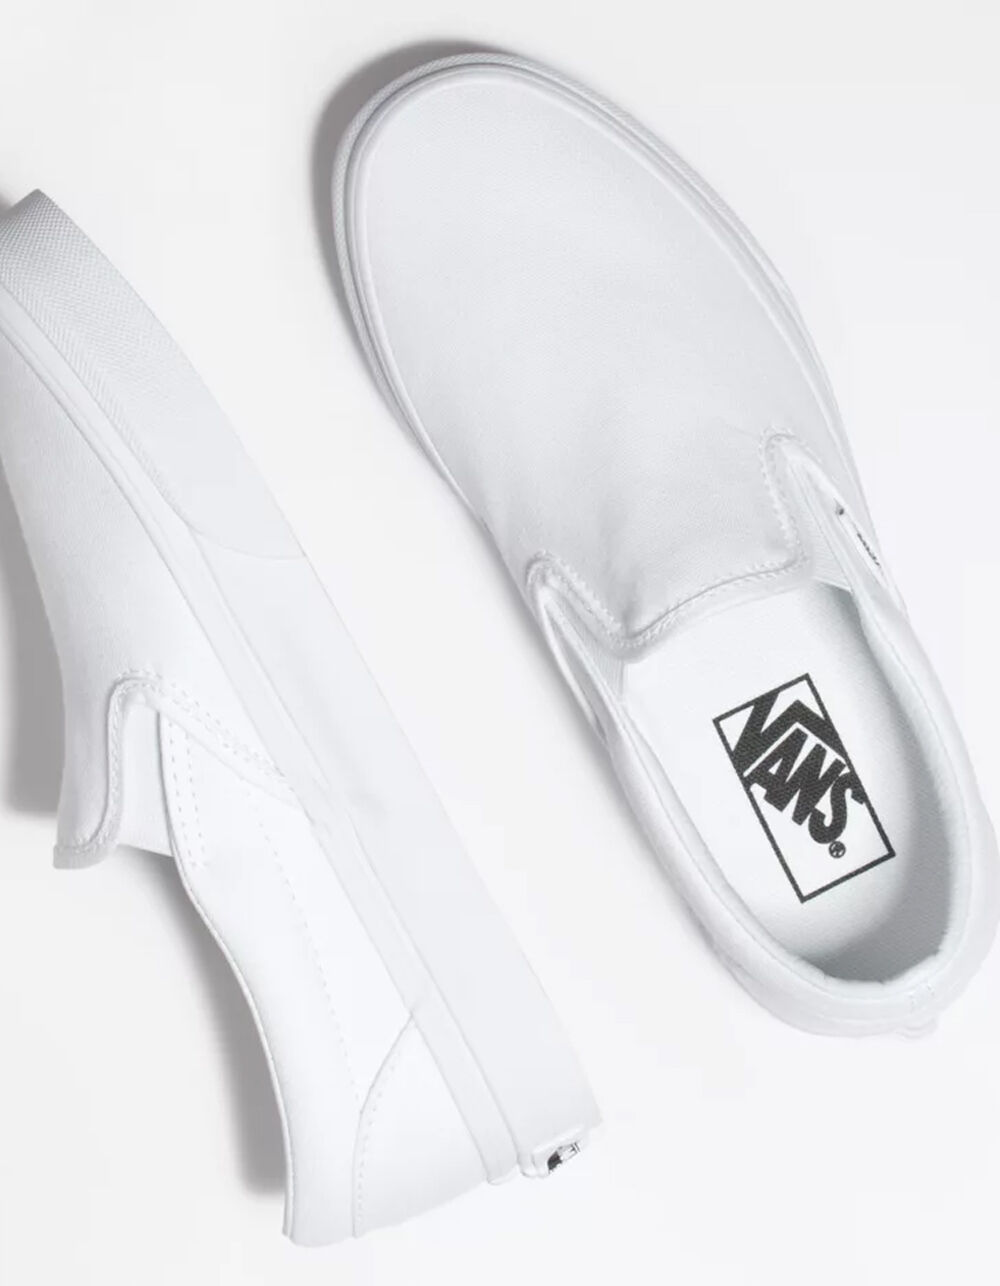 Vans Women's Classic Slip-On Shoes - birch/true White 6.5